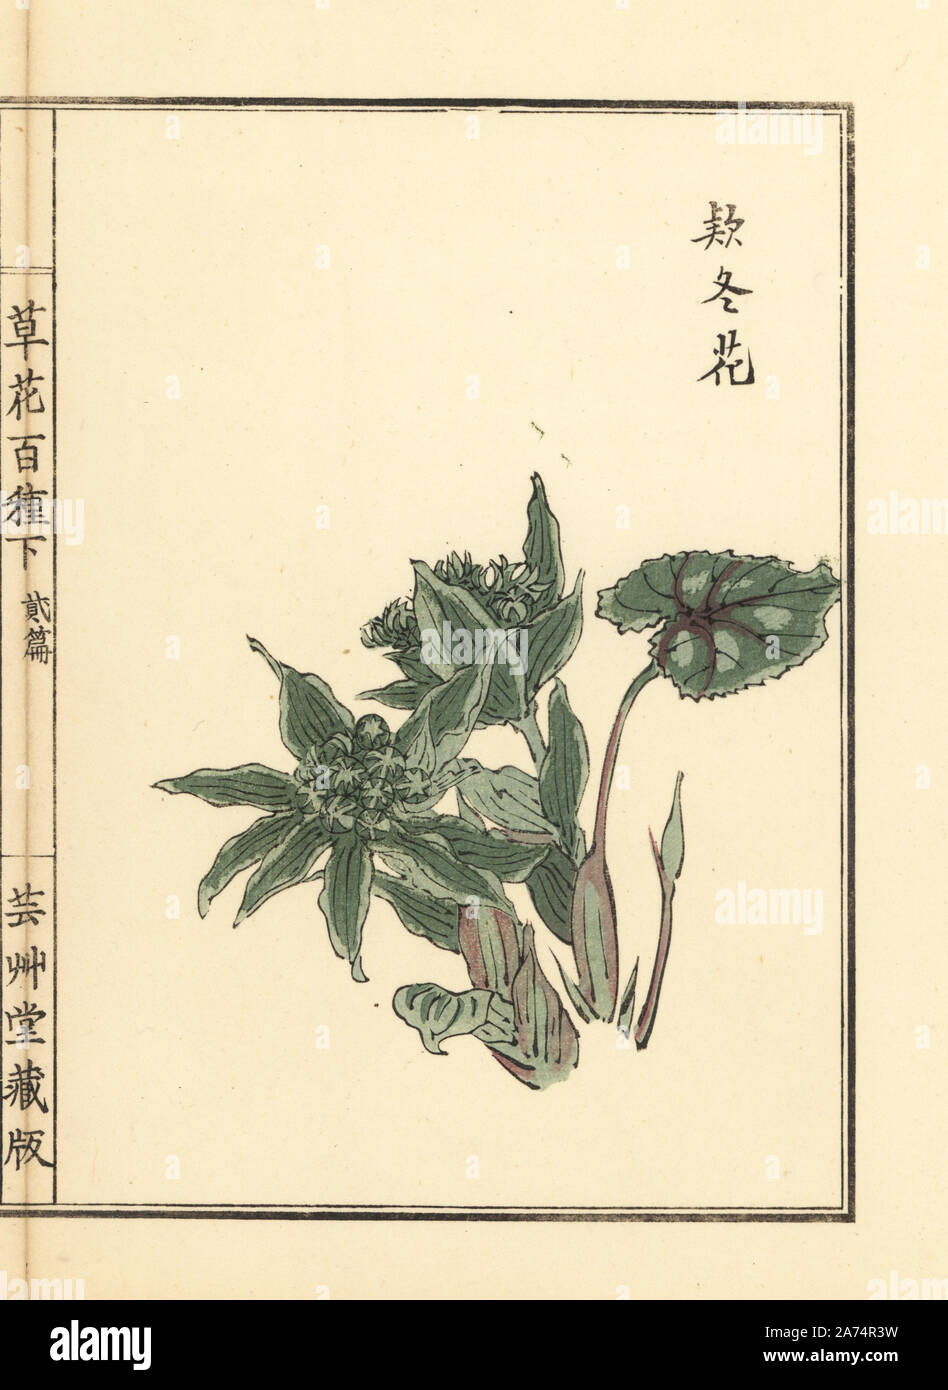 Kantouka, fuki or bog rhubarb, Petasites japonicus. Handcoloured woodblock print by Kono Bairei from Kusa Bana Hyakushu (One Hundred Varieties of Flowers), Tokyo, Yamada, 1901. Stock Photo